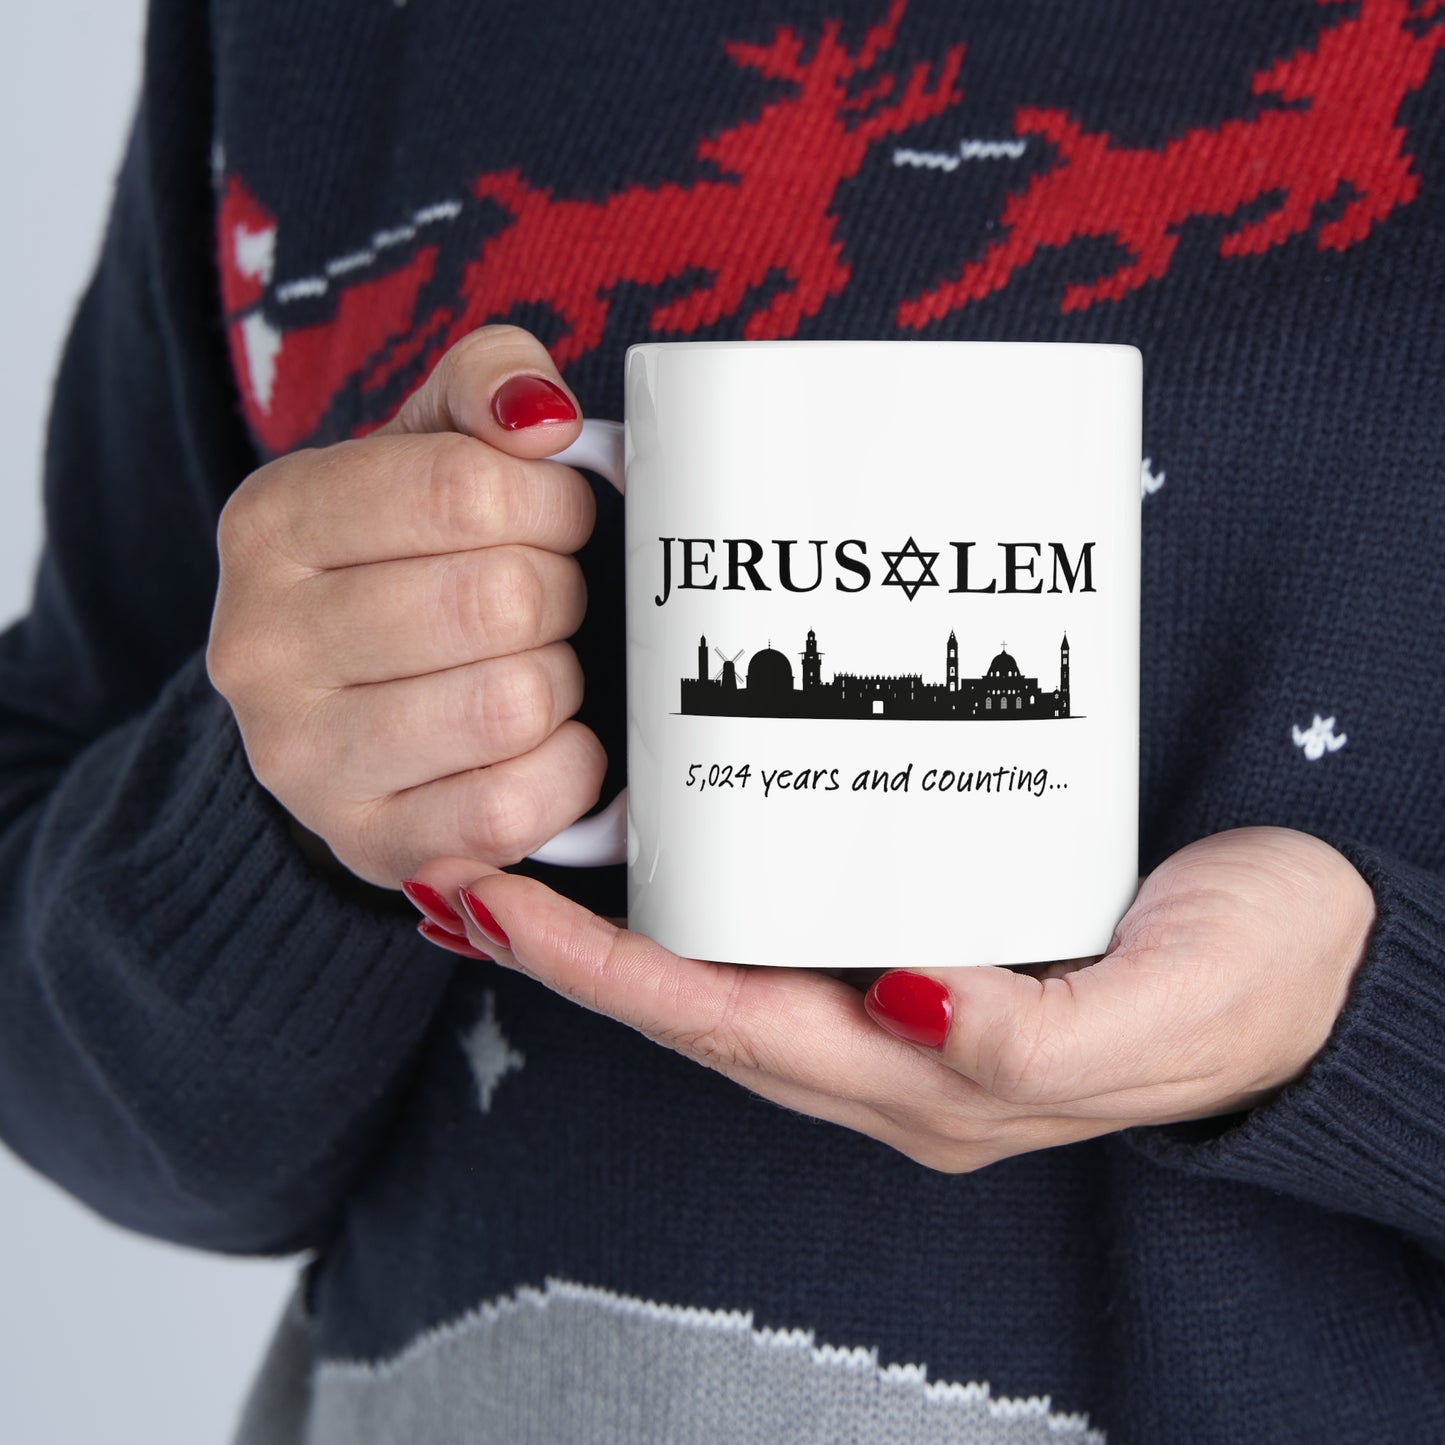 Jerusalem - 5,024 Years and Counting... Ceramic Mug, 11oz